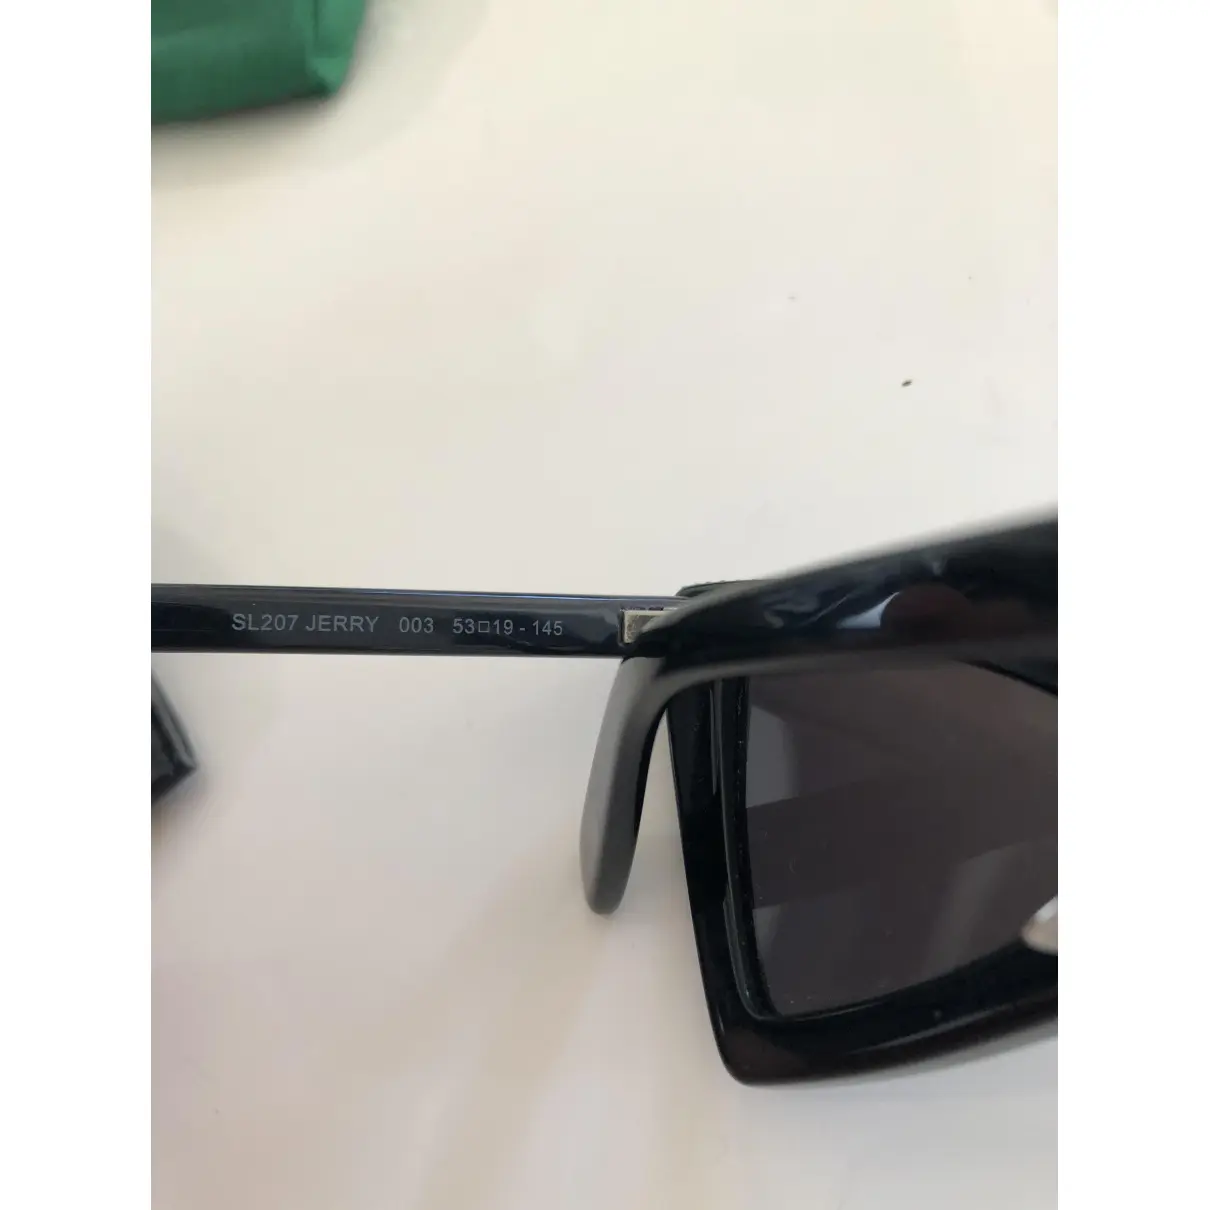 Luxury Saint Laurent Sunglasses Women